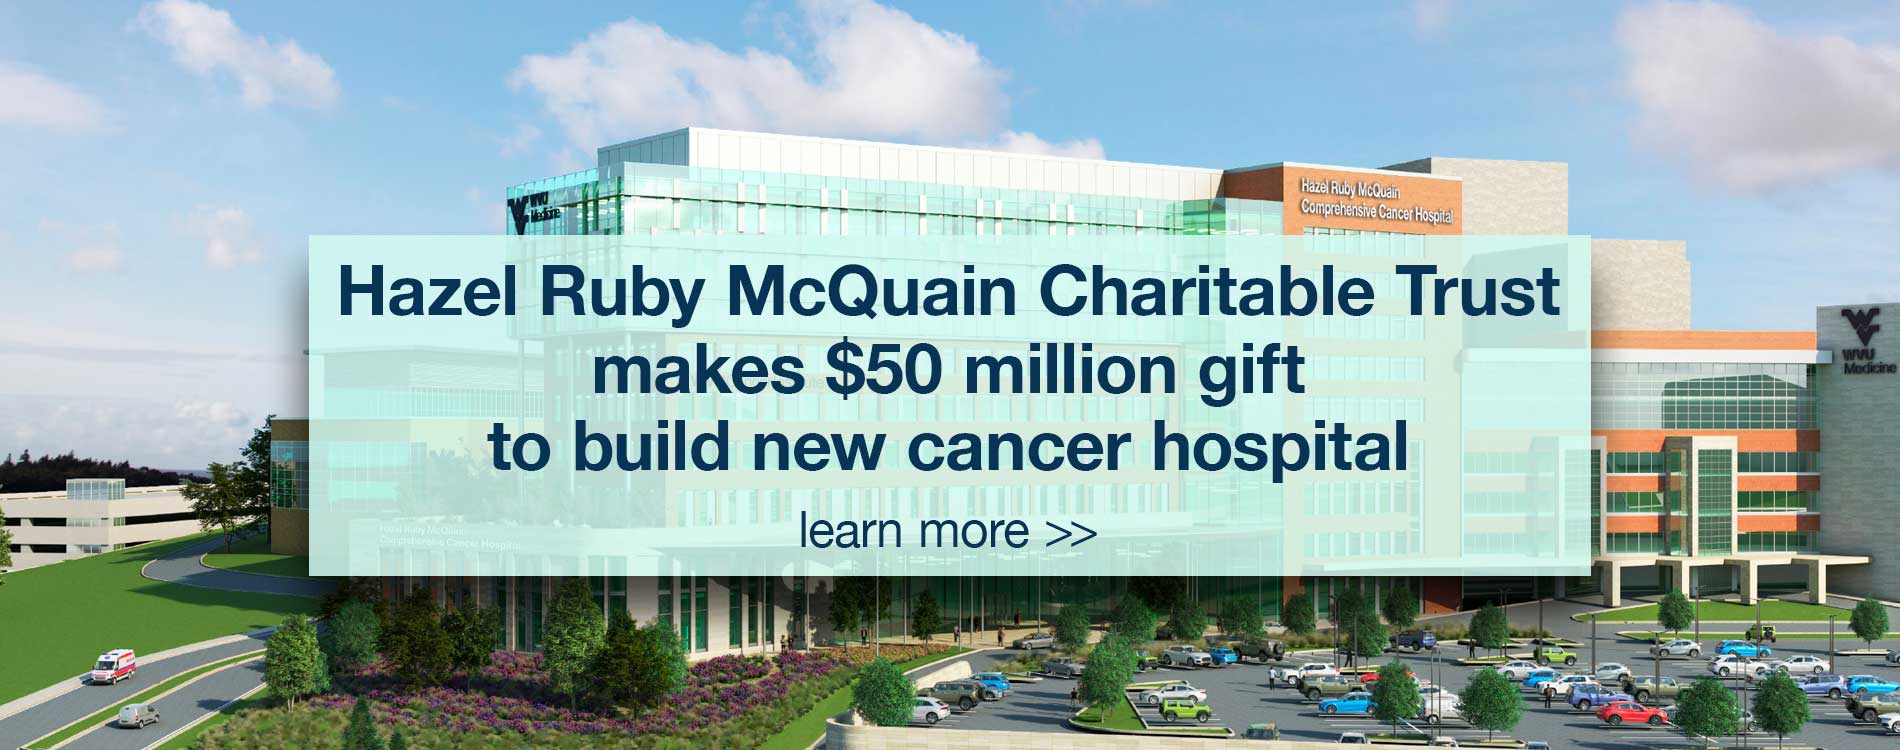 Hazel Ruby McQuain Charitable Trust makes $50 million gift to build new cancer hospital